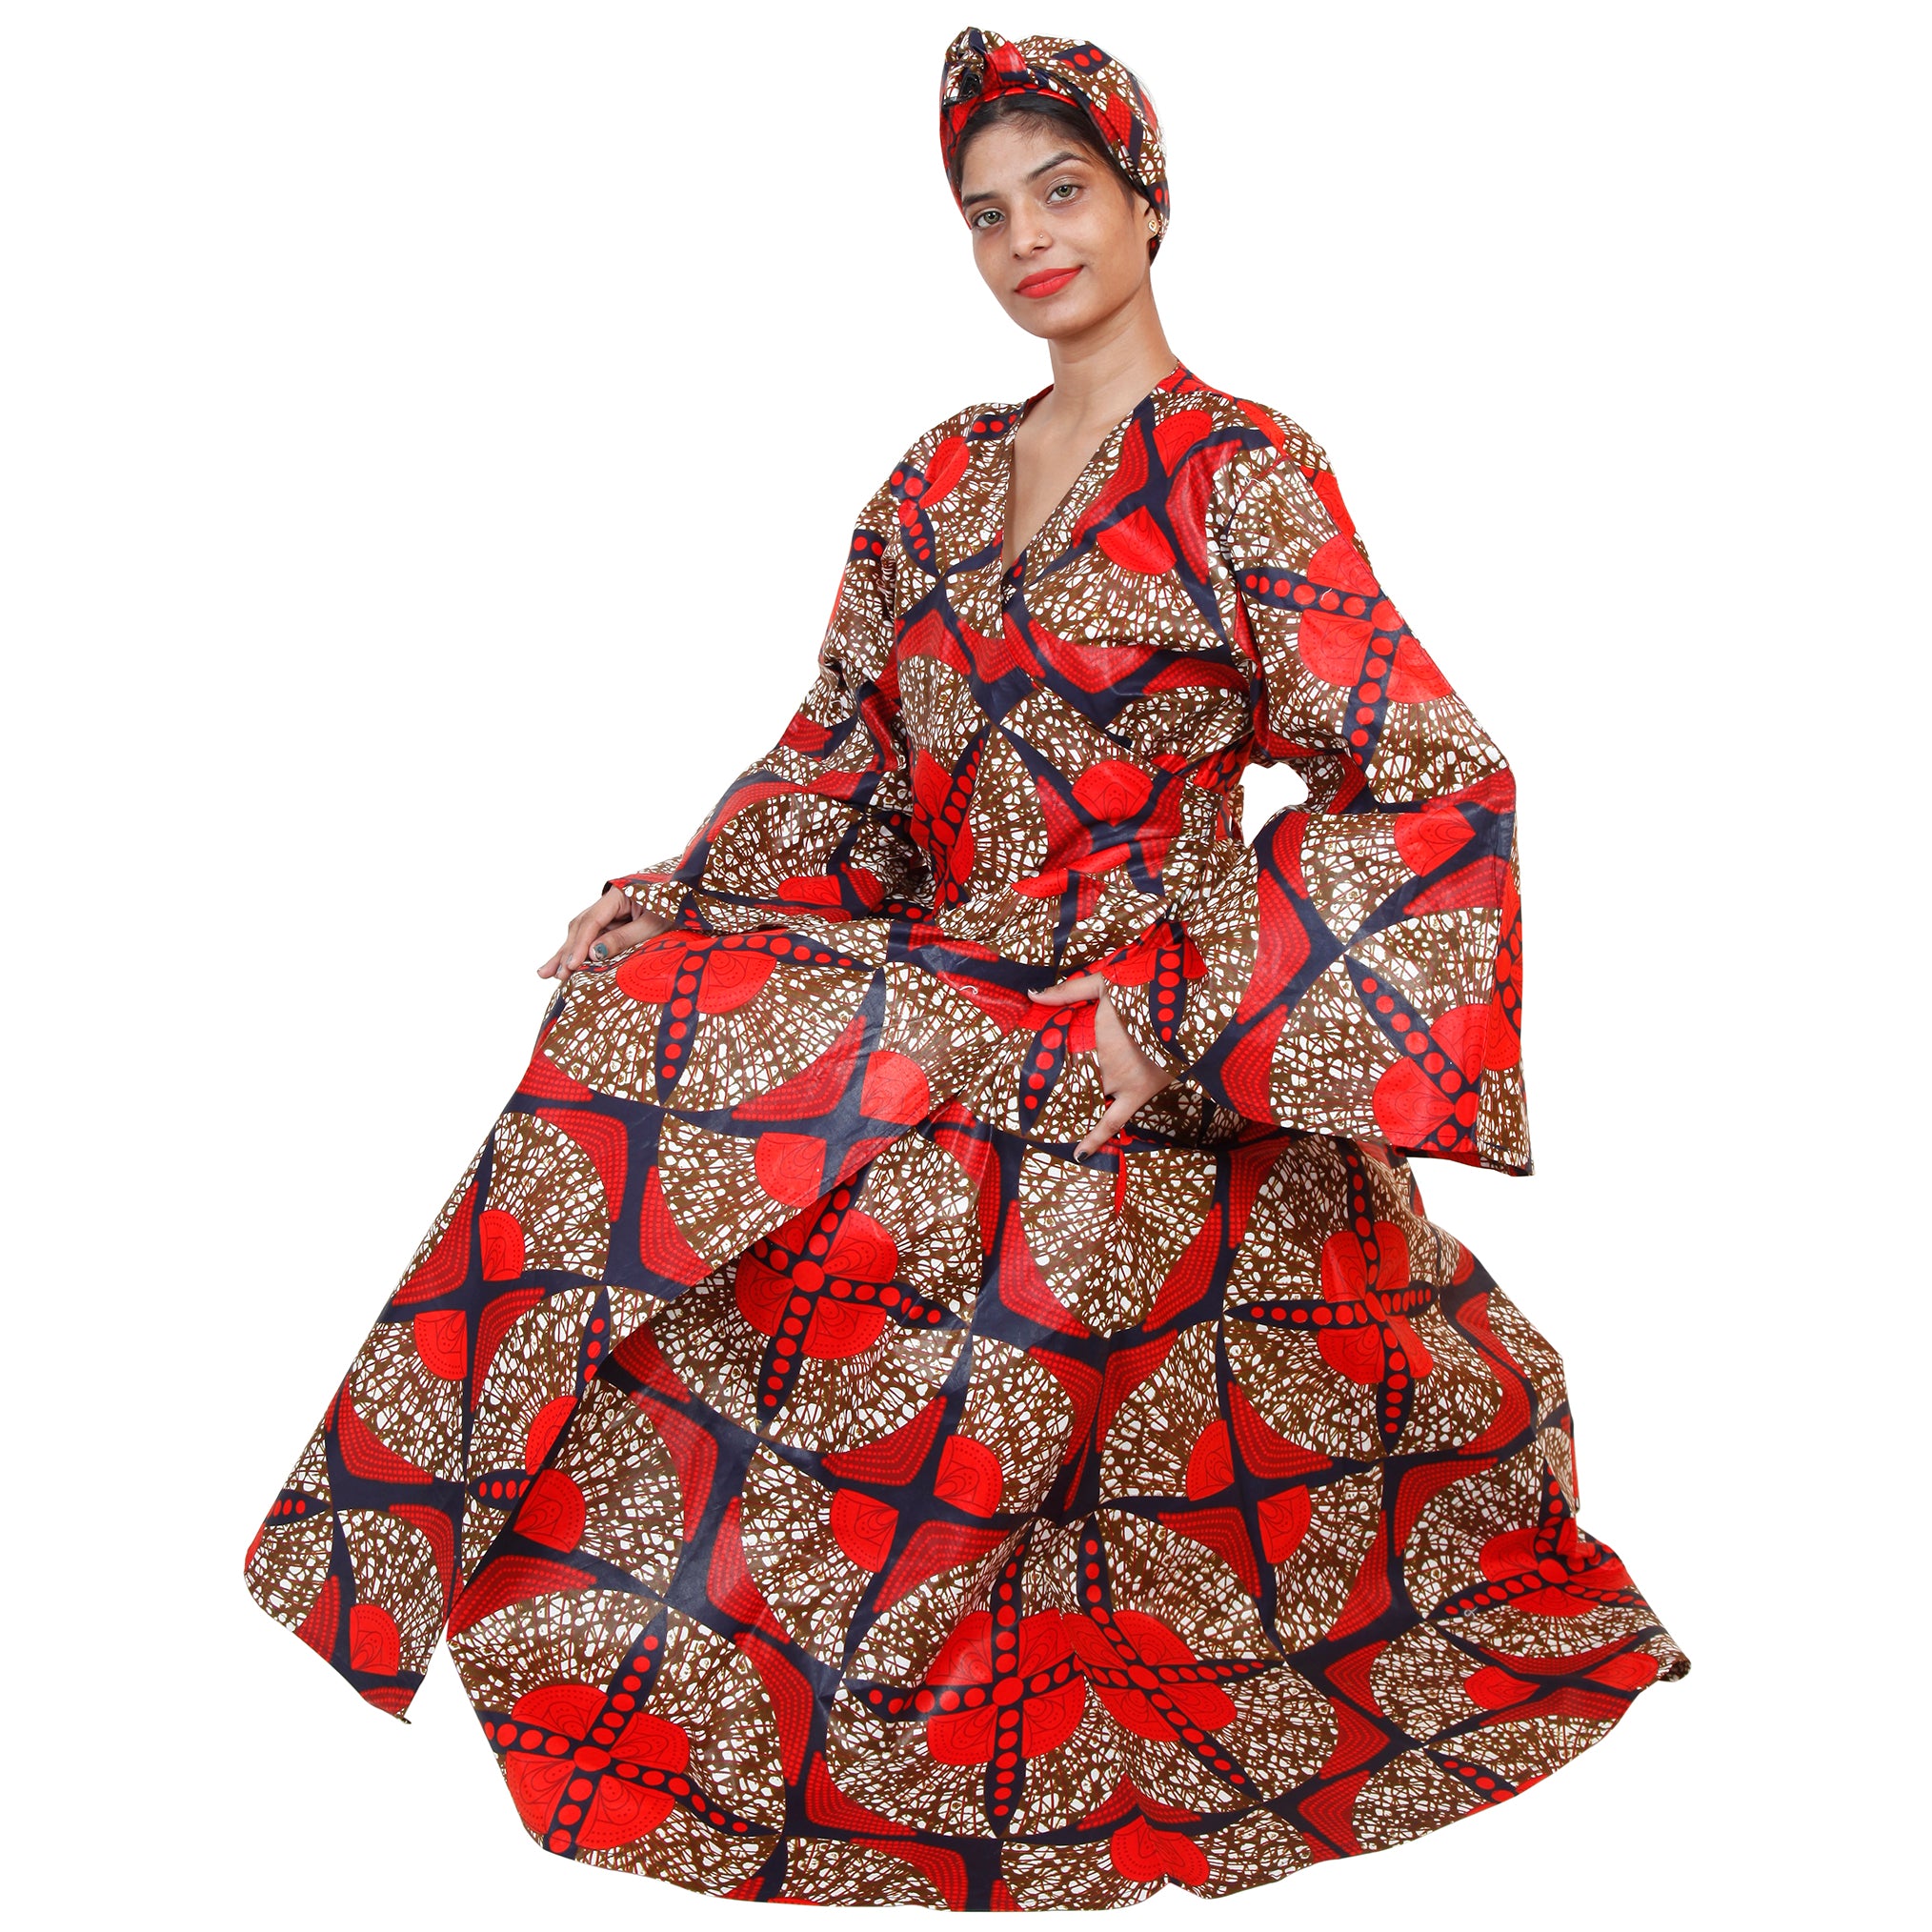 Women's African PLUS Size Long Sleeve Wrap Maxi Dress